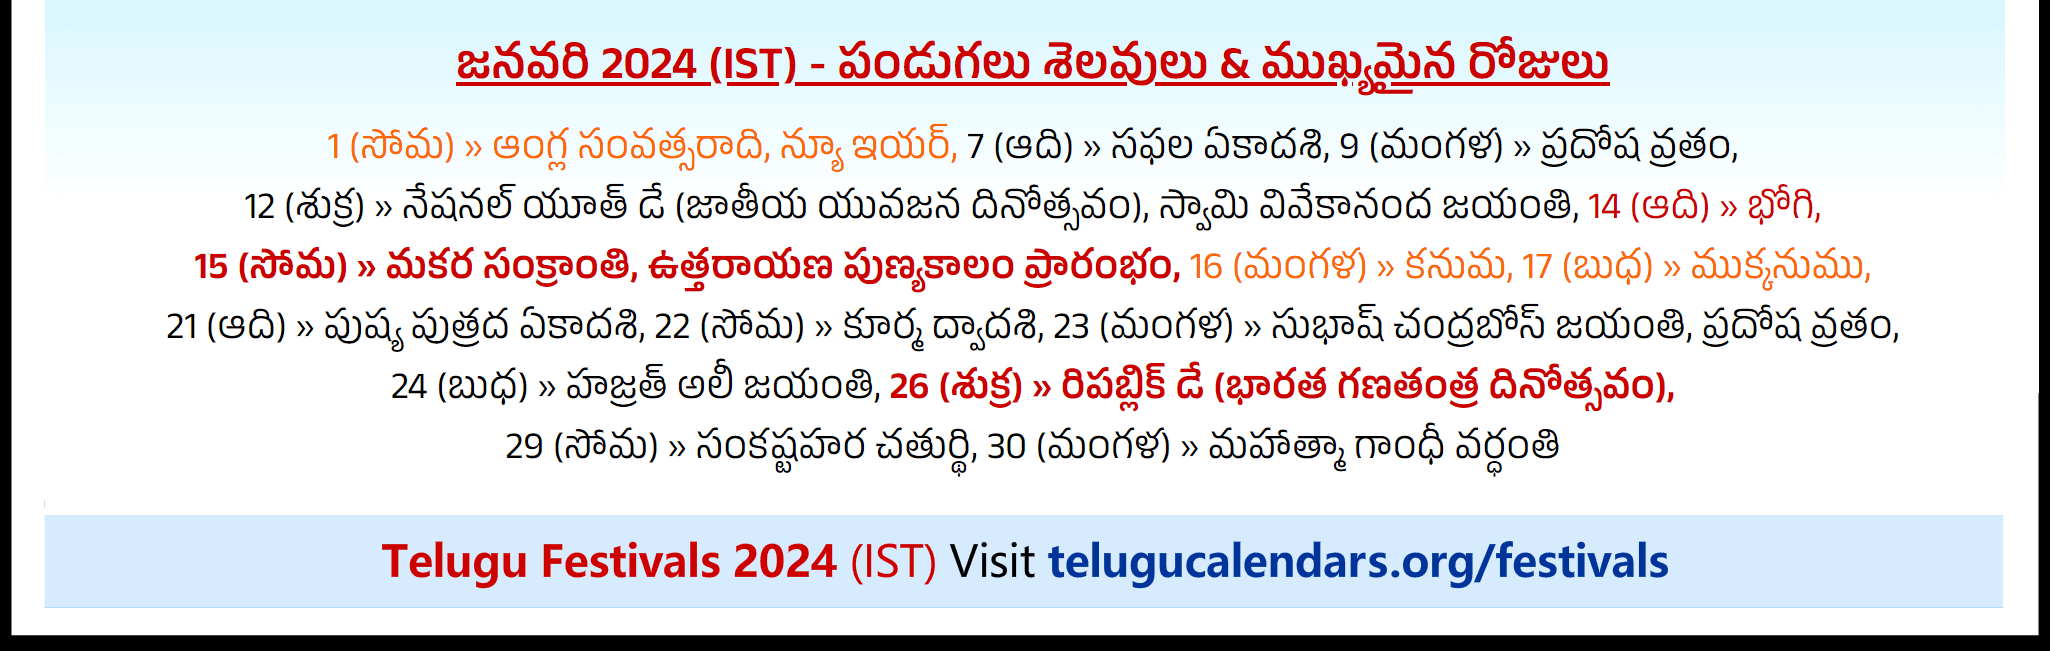 Telugu Festivals 2024 January Auckland